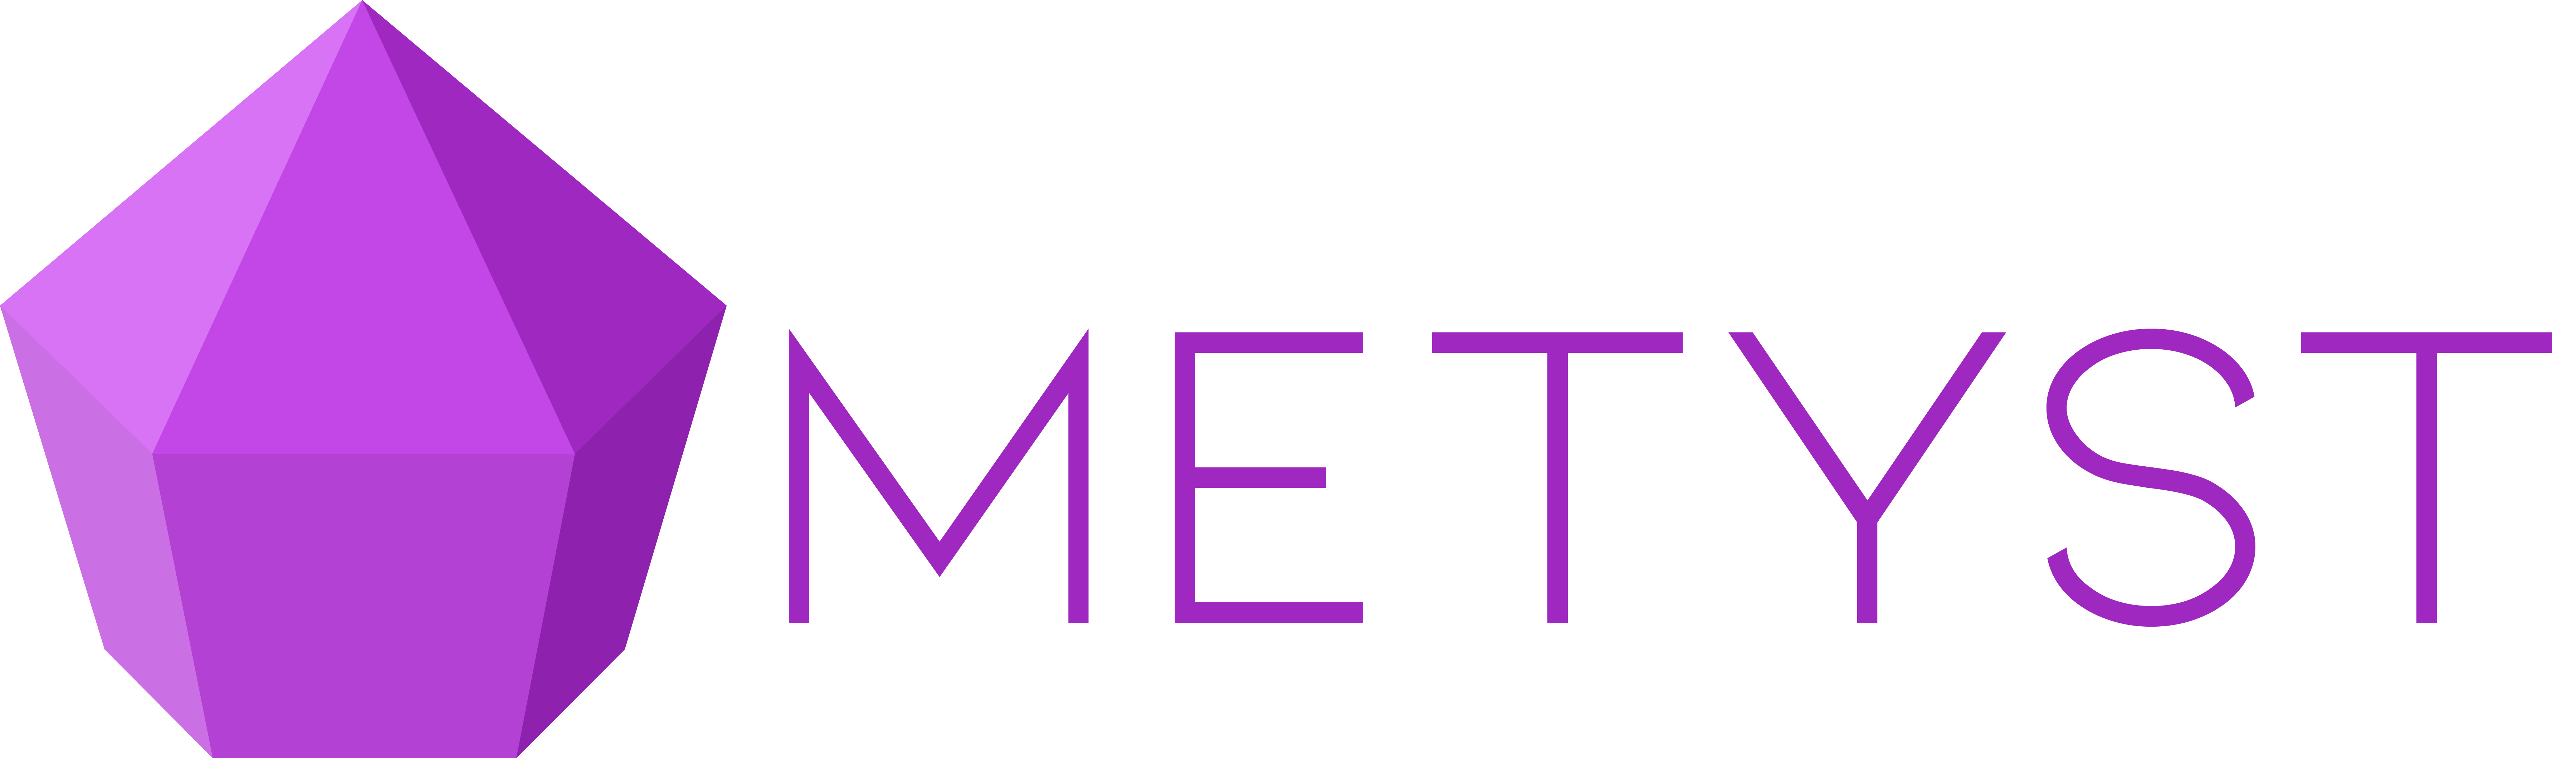 Metyst logo